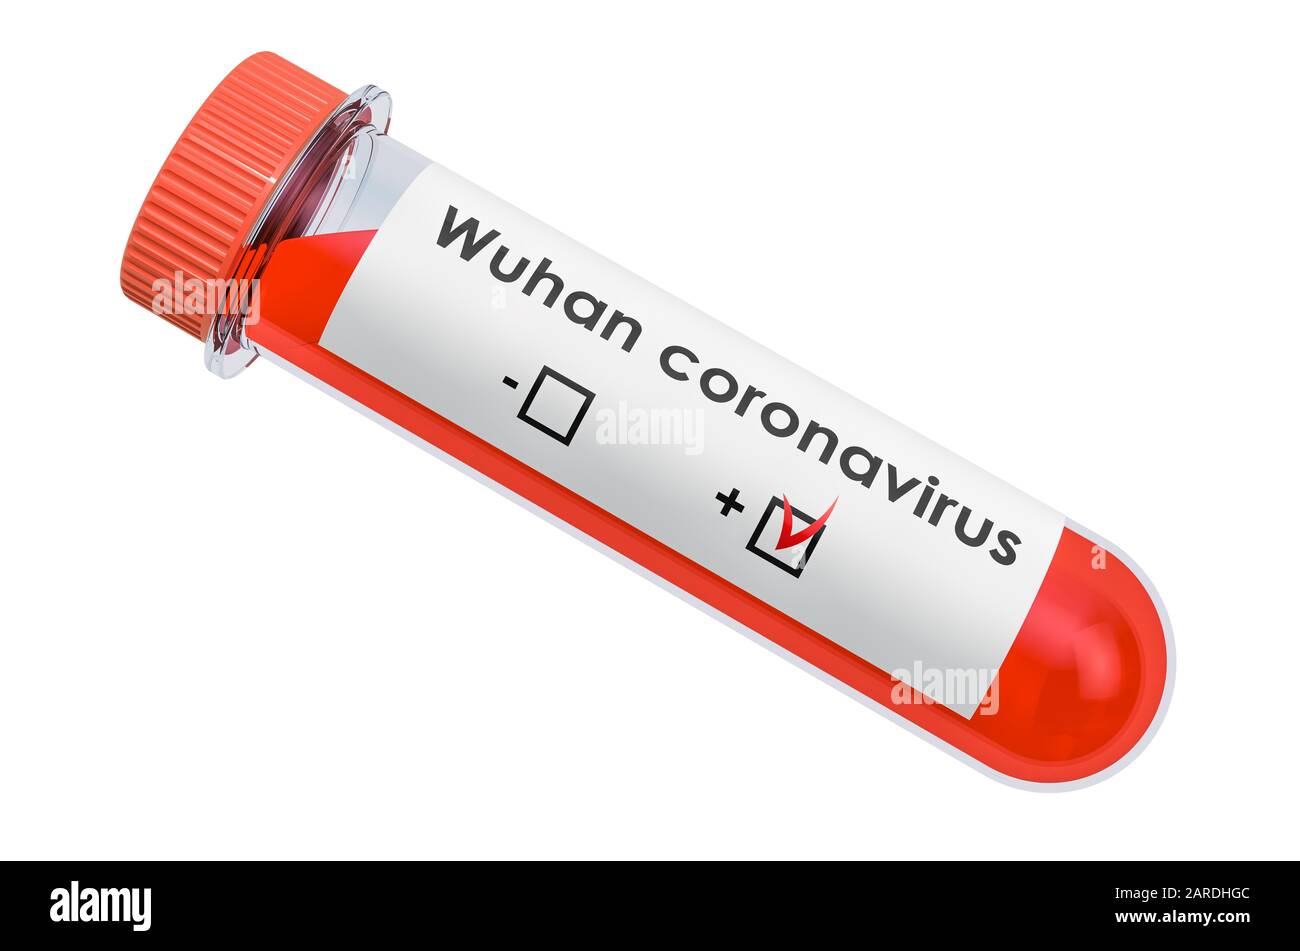 Chinese coronavirus. Test tube with blood sample positive with Wuhan coronavirus, 3D rendering isolated on white background Stock Photo